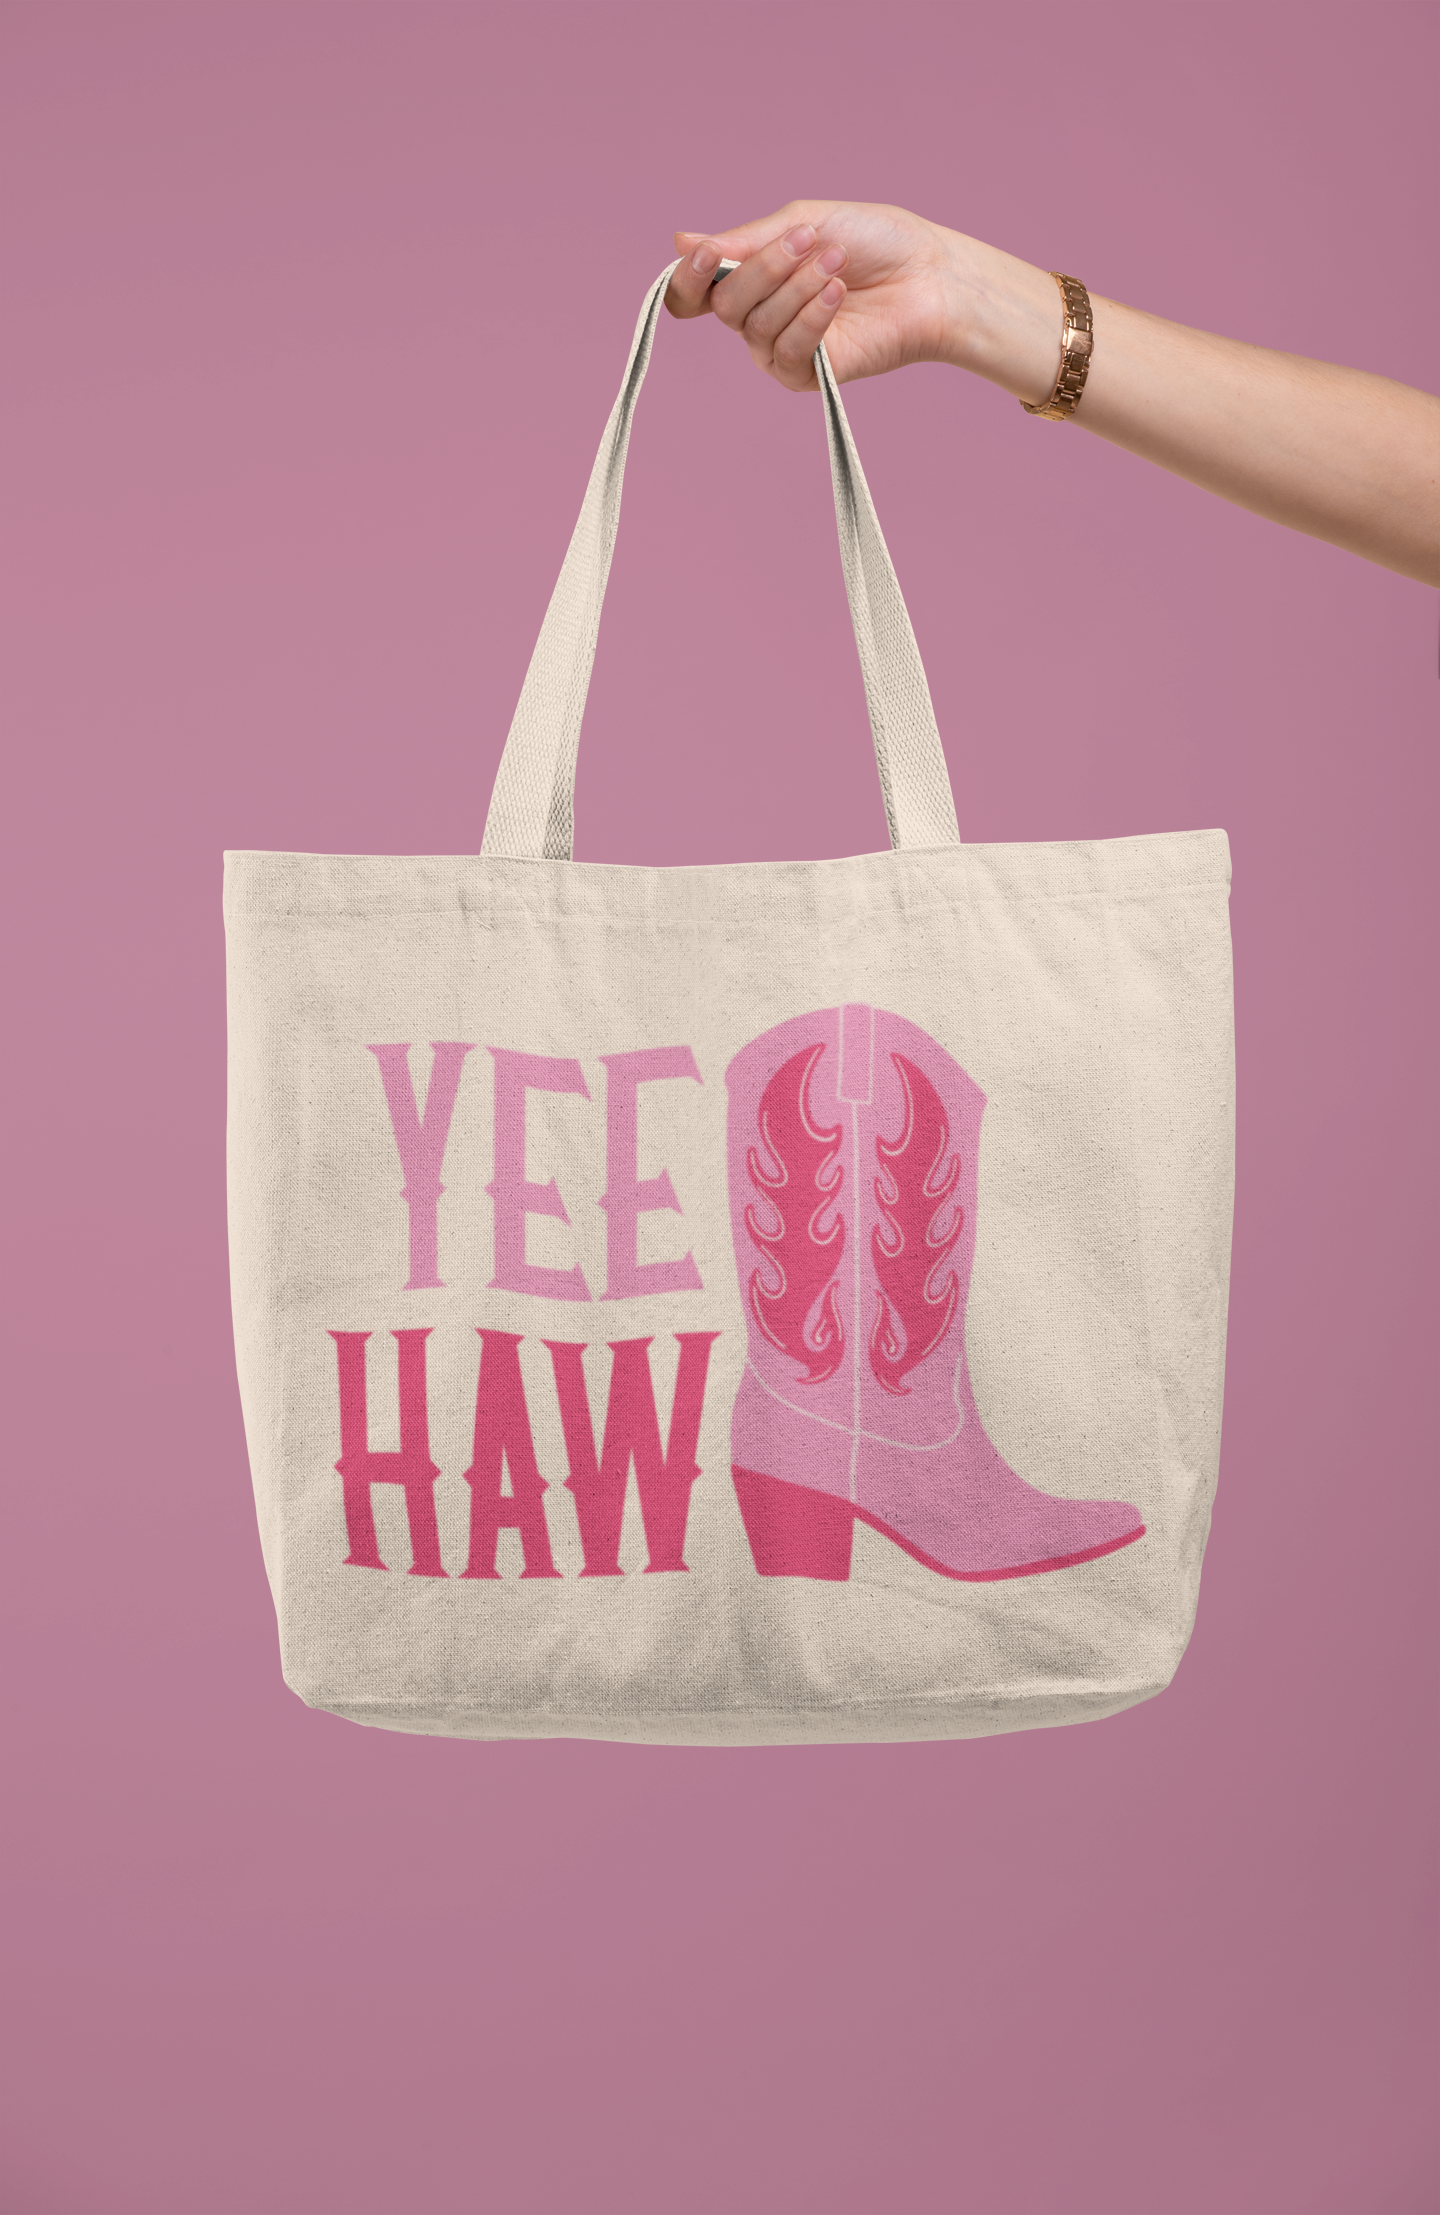 Yee Haw Cowgirl Tote Bag SVG PNG